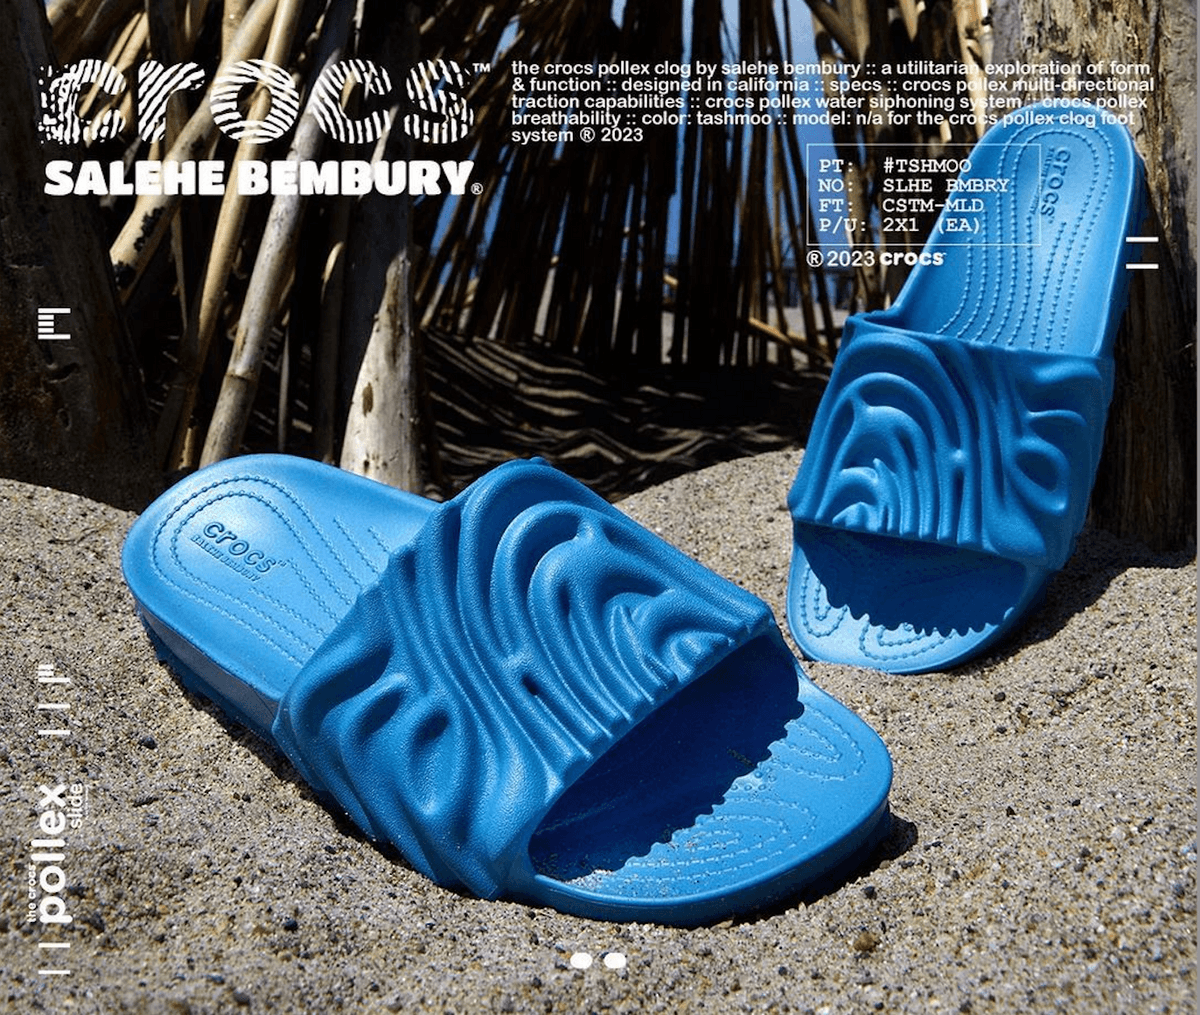 The Salehe Bembury x Crocs Pollex Slides "Tashmoo" Releases July 20th